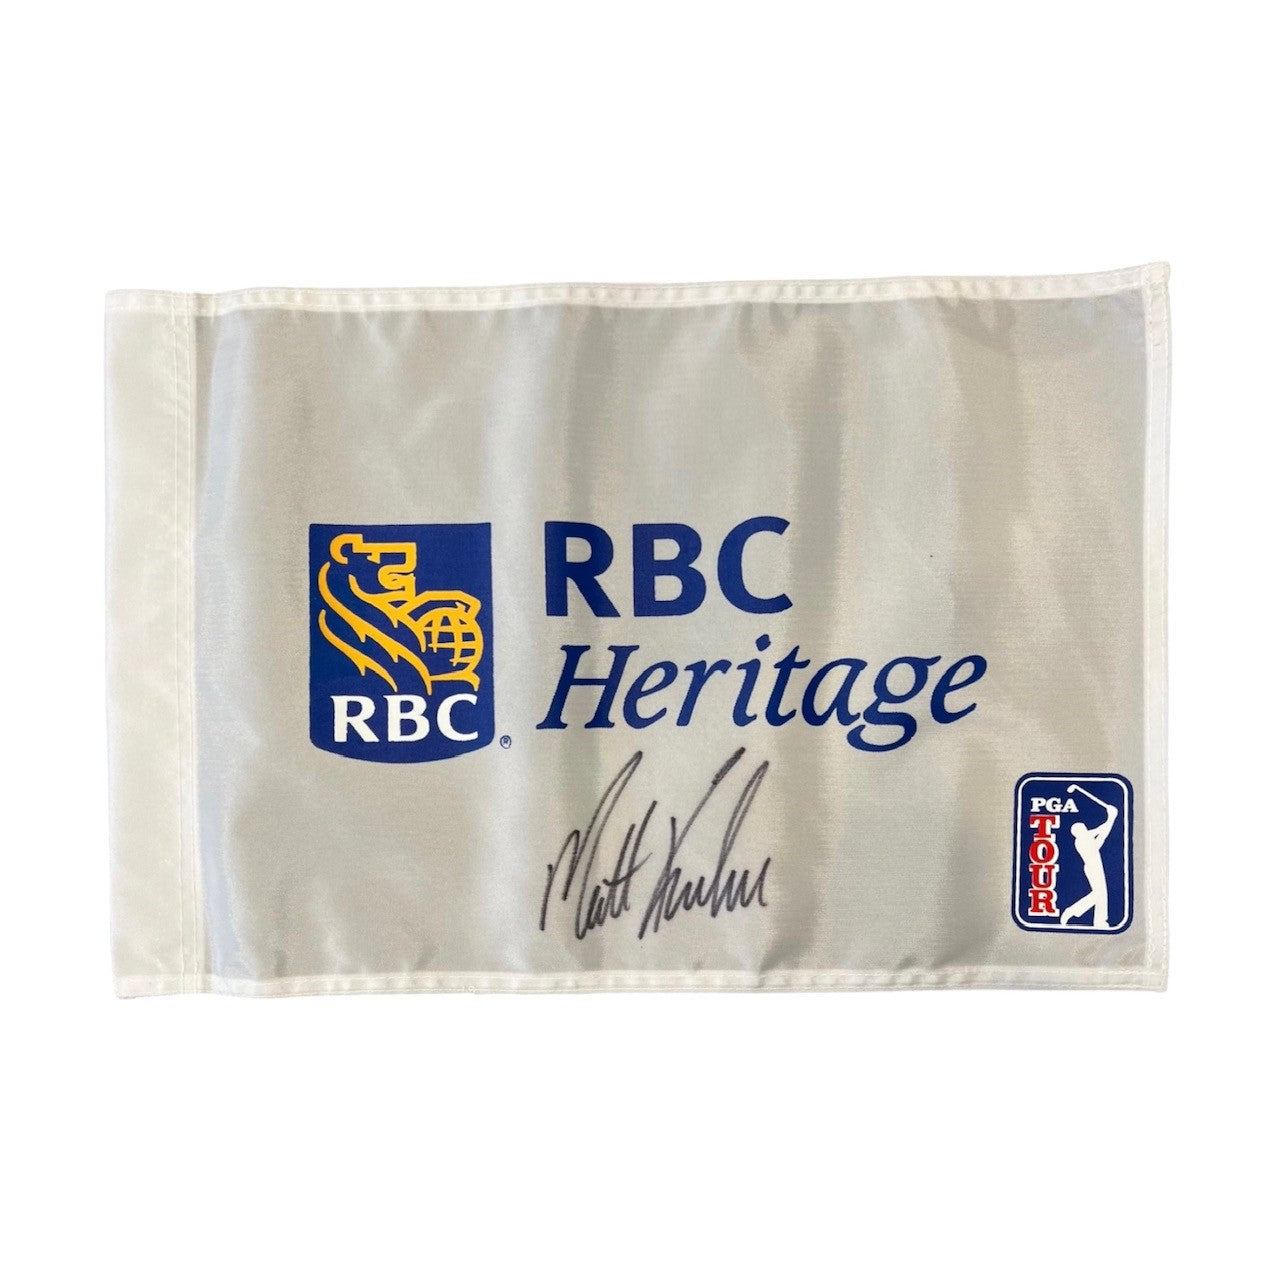 RBC Heritage PGA TOUR Game Used Flag - Signed by Matt Kuchar